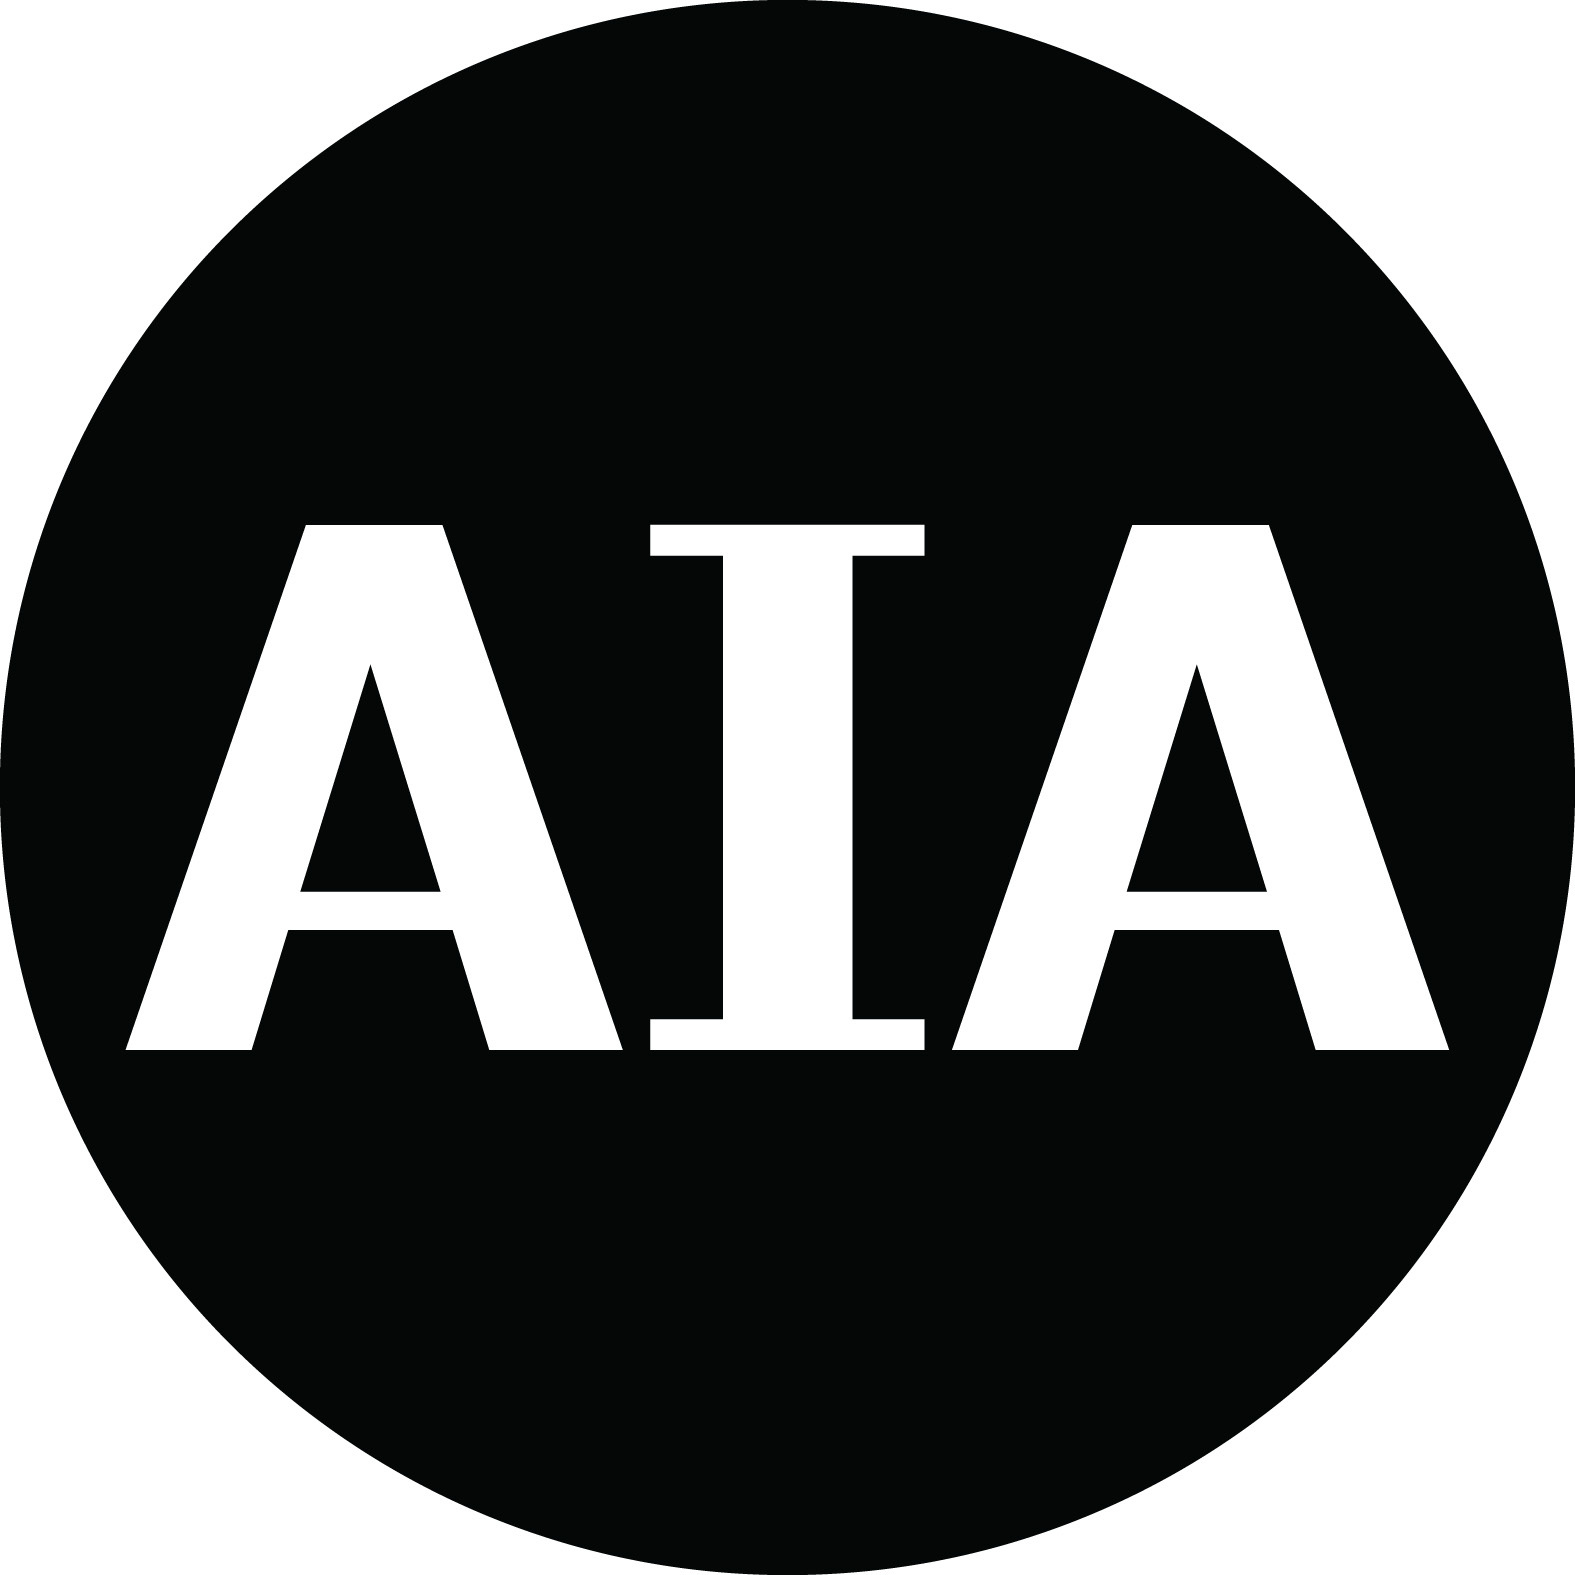 AIA donates $500,000 to Habitat for Humanity Virginia